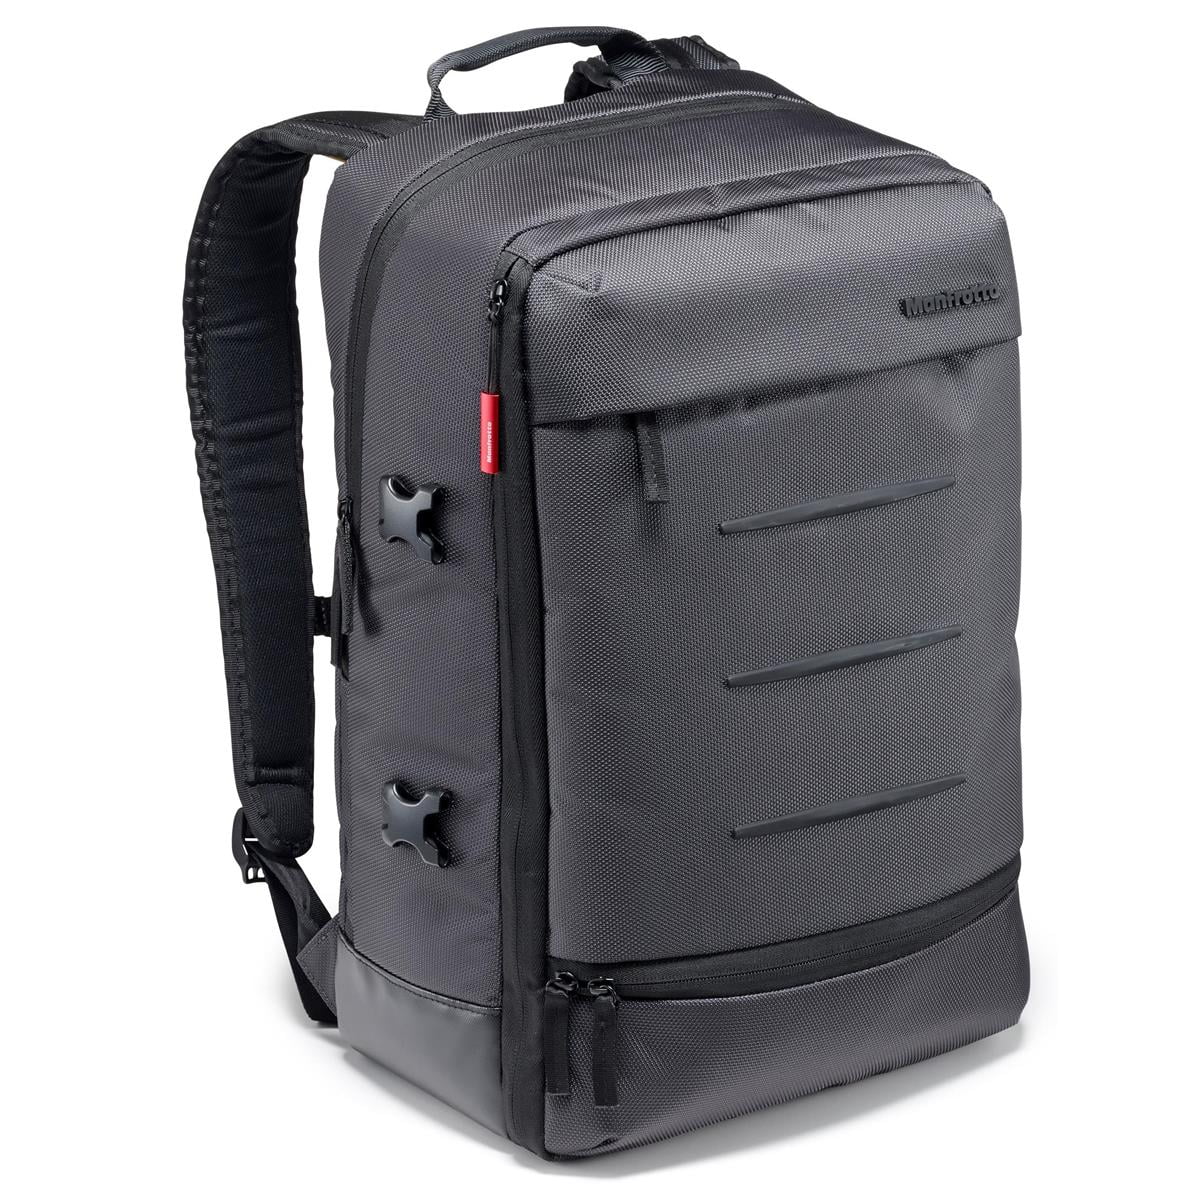 Manhattan Mover 30 Backpack for CSC, DSLR/Mirrorless Cameras, DJI Mavic Pro/Pro Gray - Walmart.com